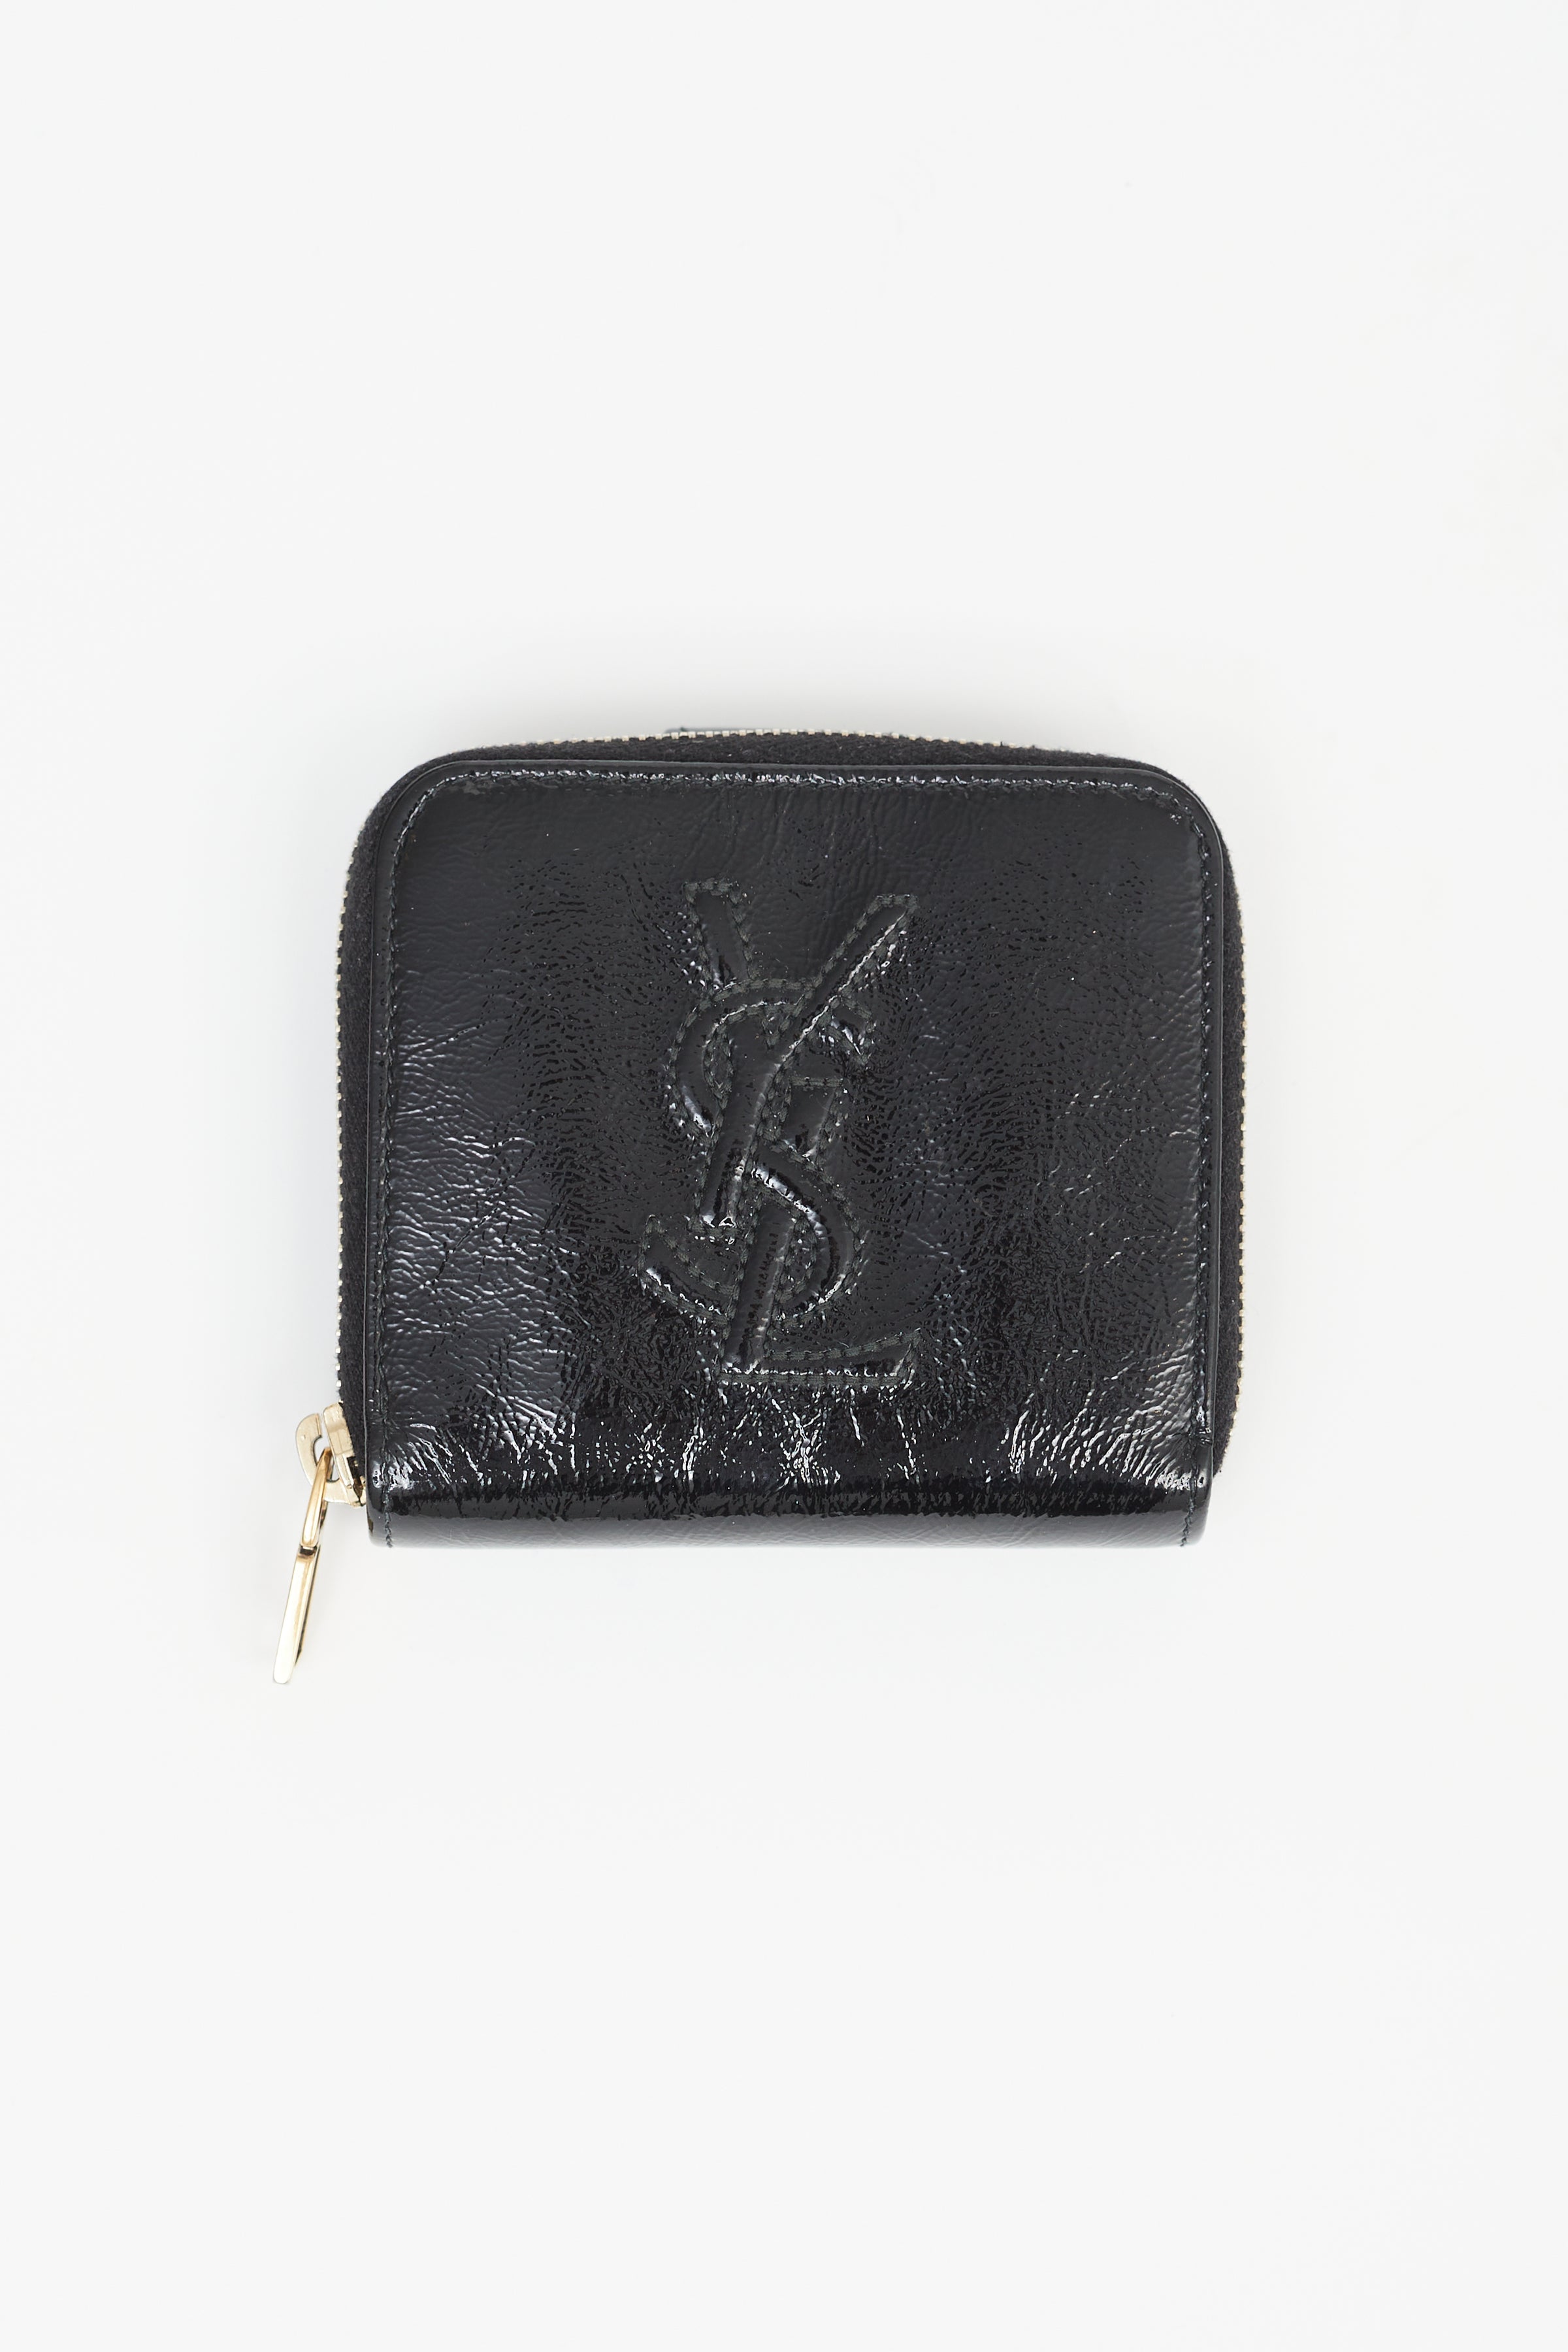 Yves Saint Laurent Tiny Monogram Zip Around Wallet